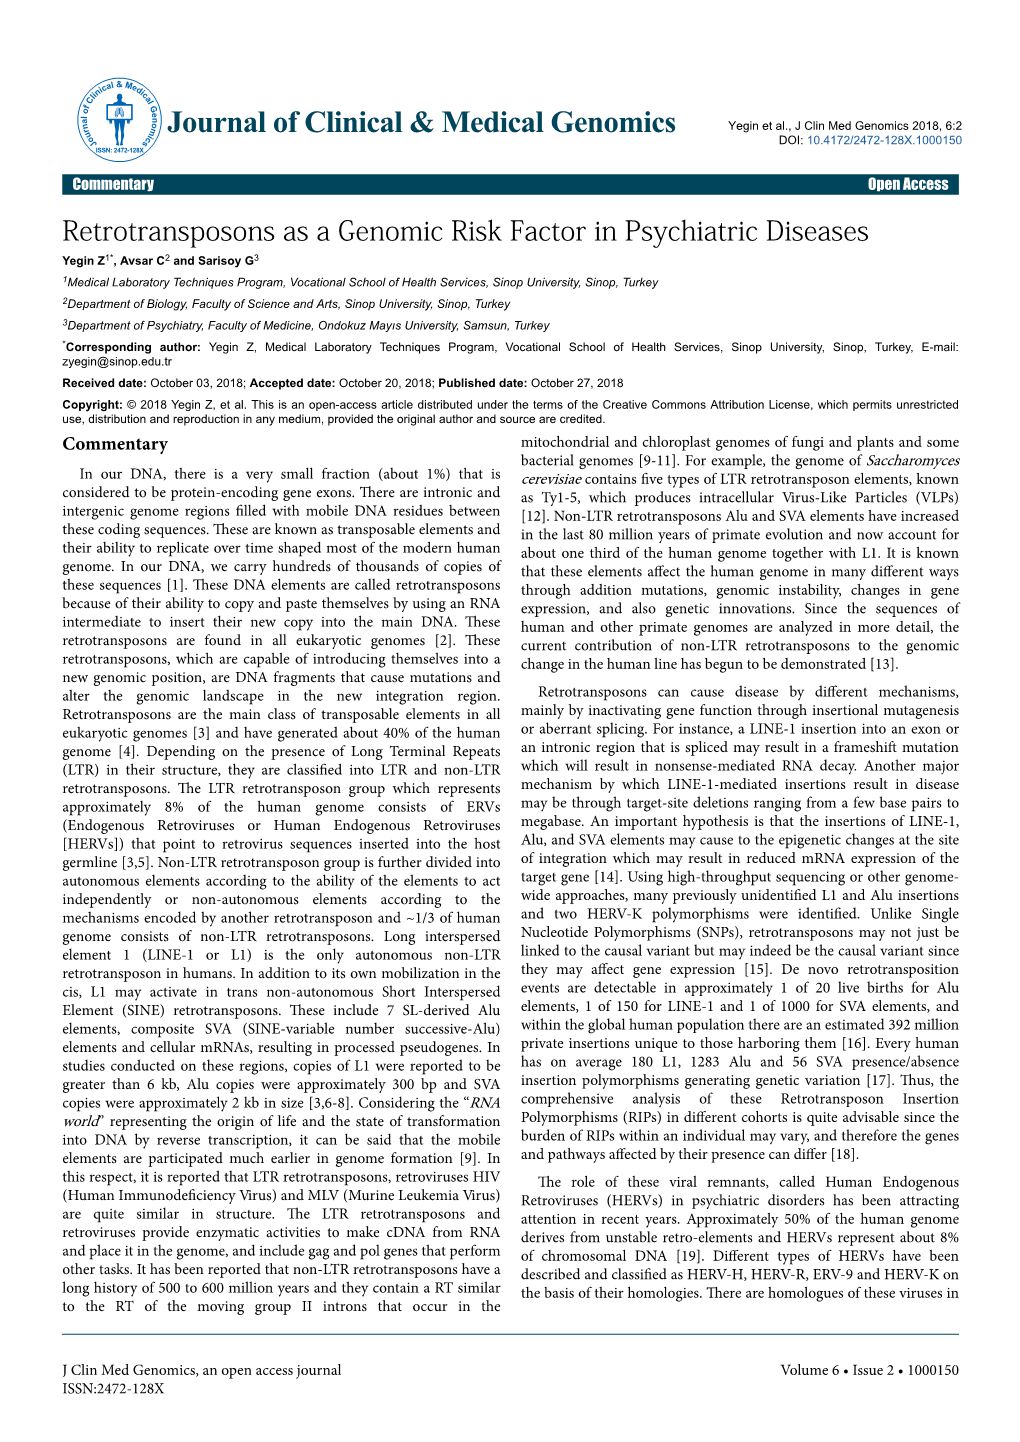 Retrotransposons As a Genomic Risk Factor in Psychiatric Diseases